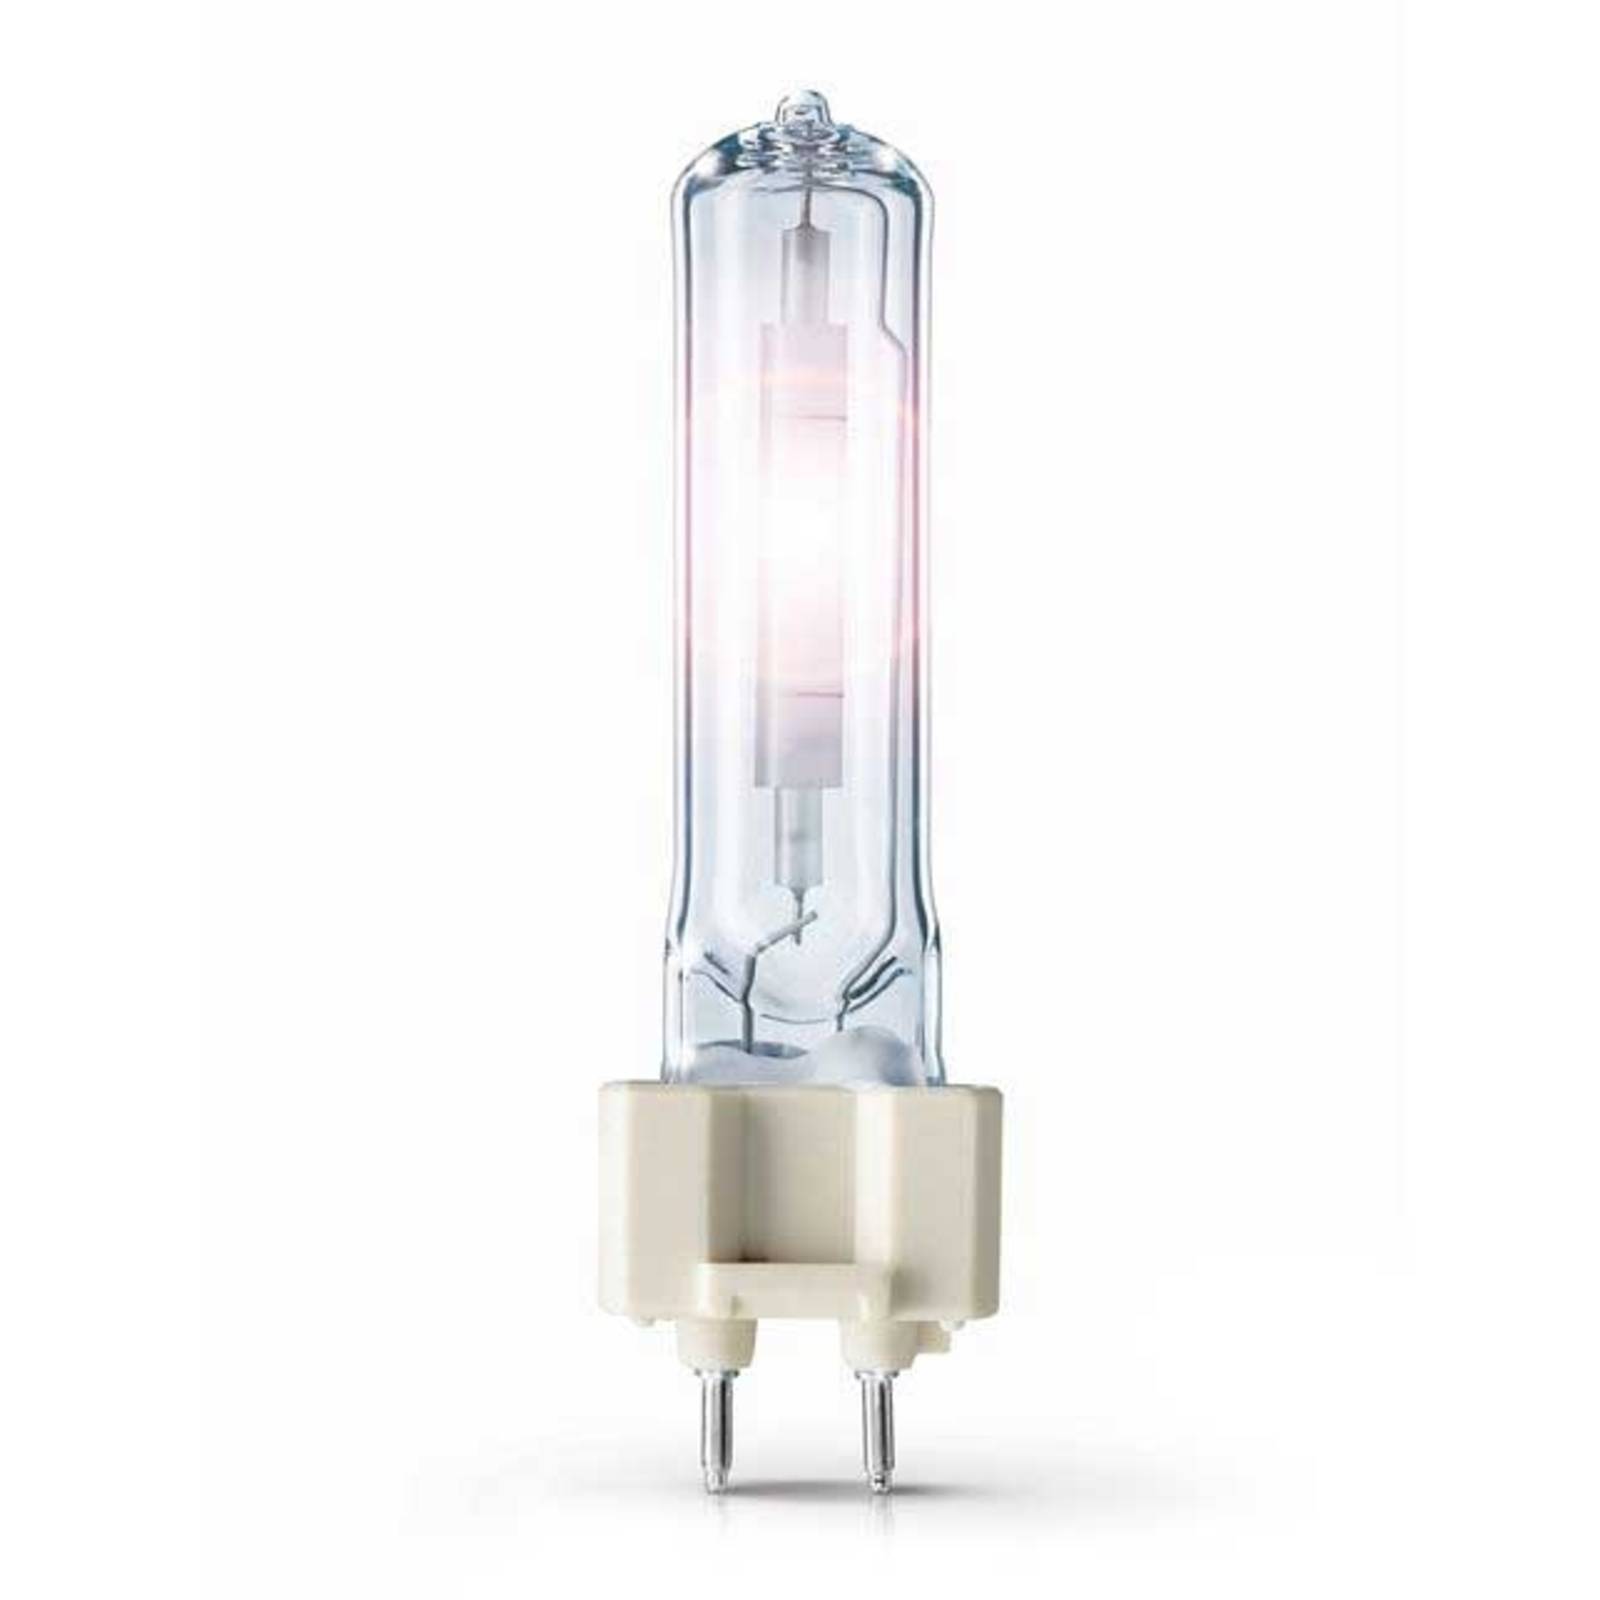 Philips GX12 mini natriumlamp MASTER SDW TG van 50W online kopen